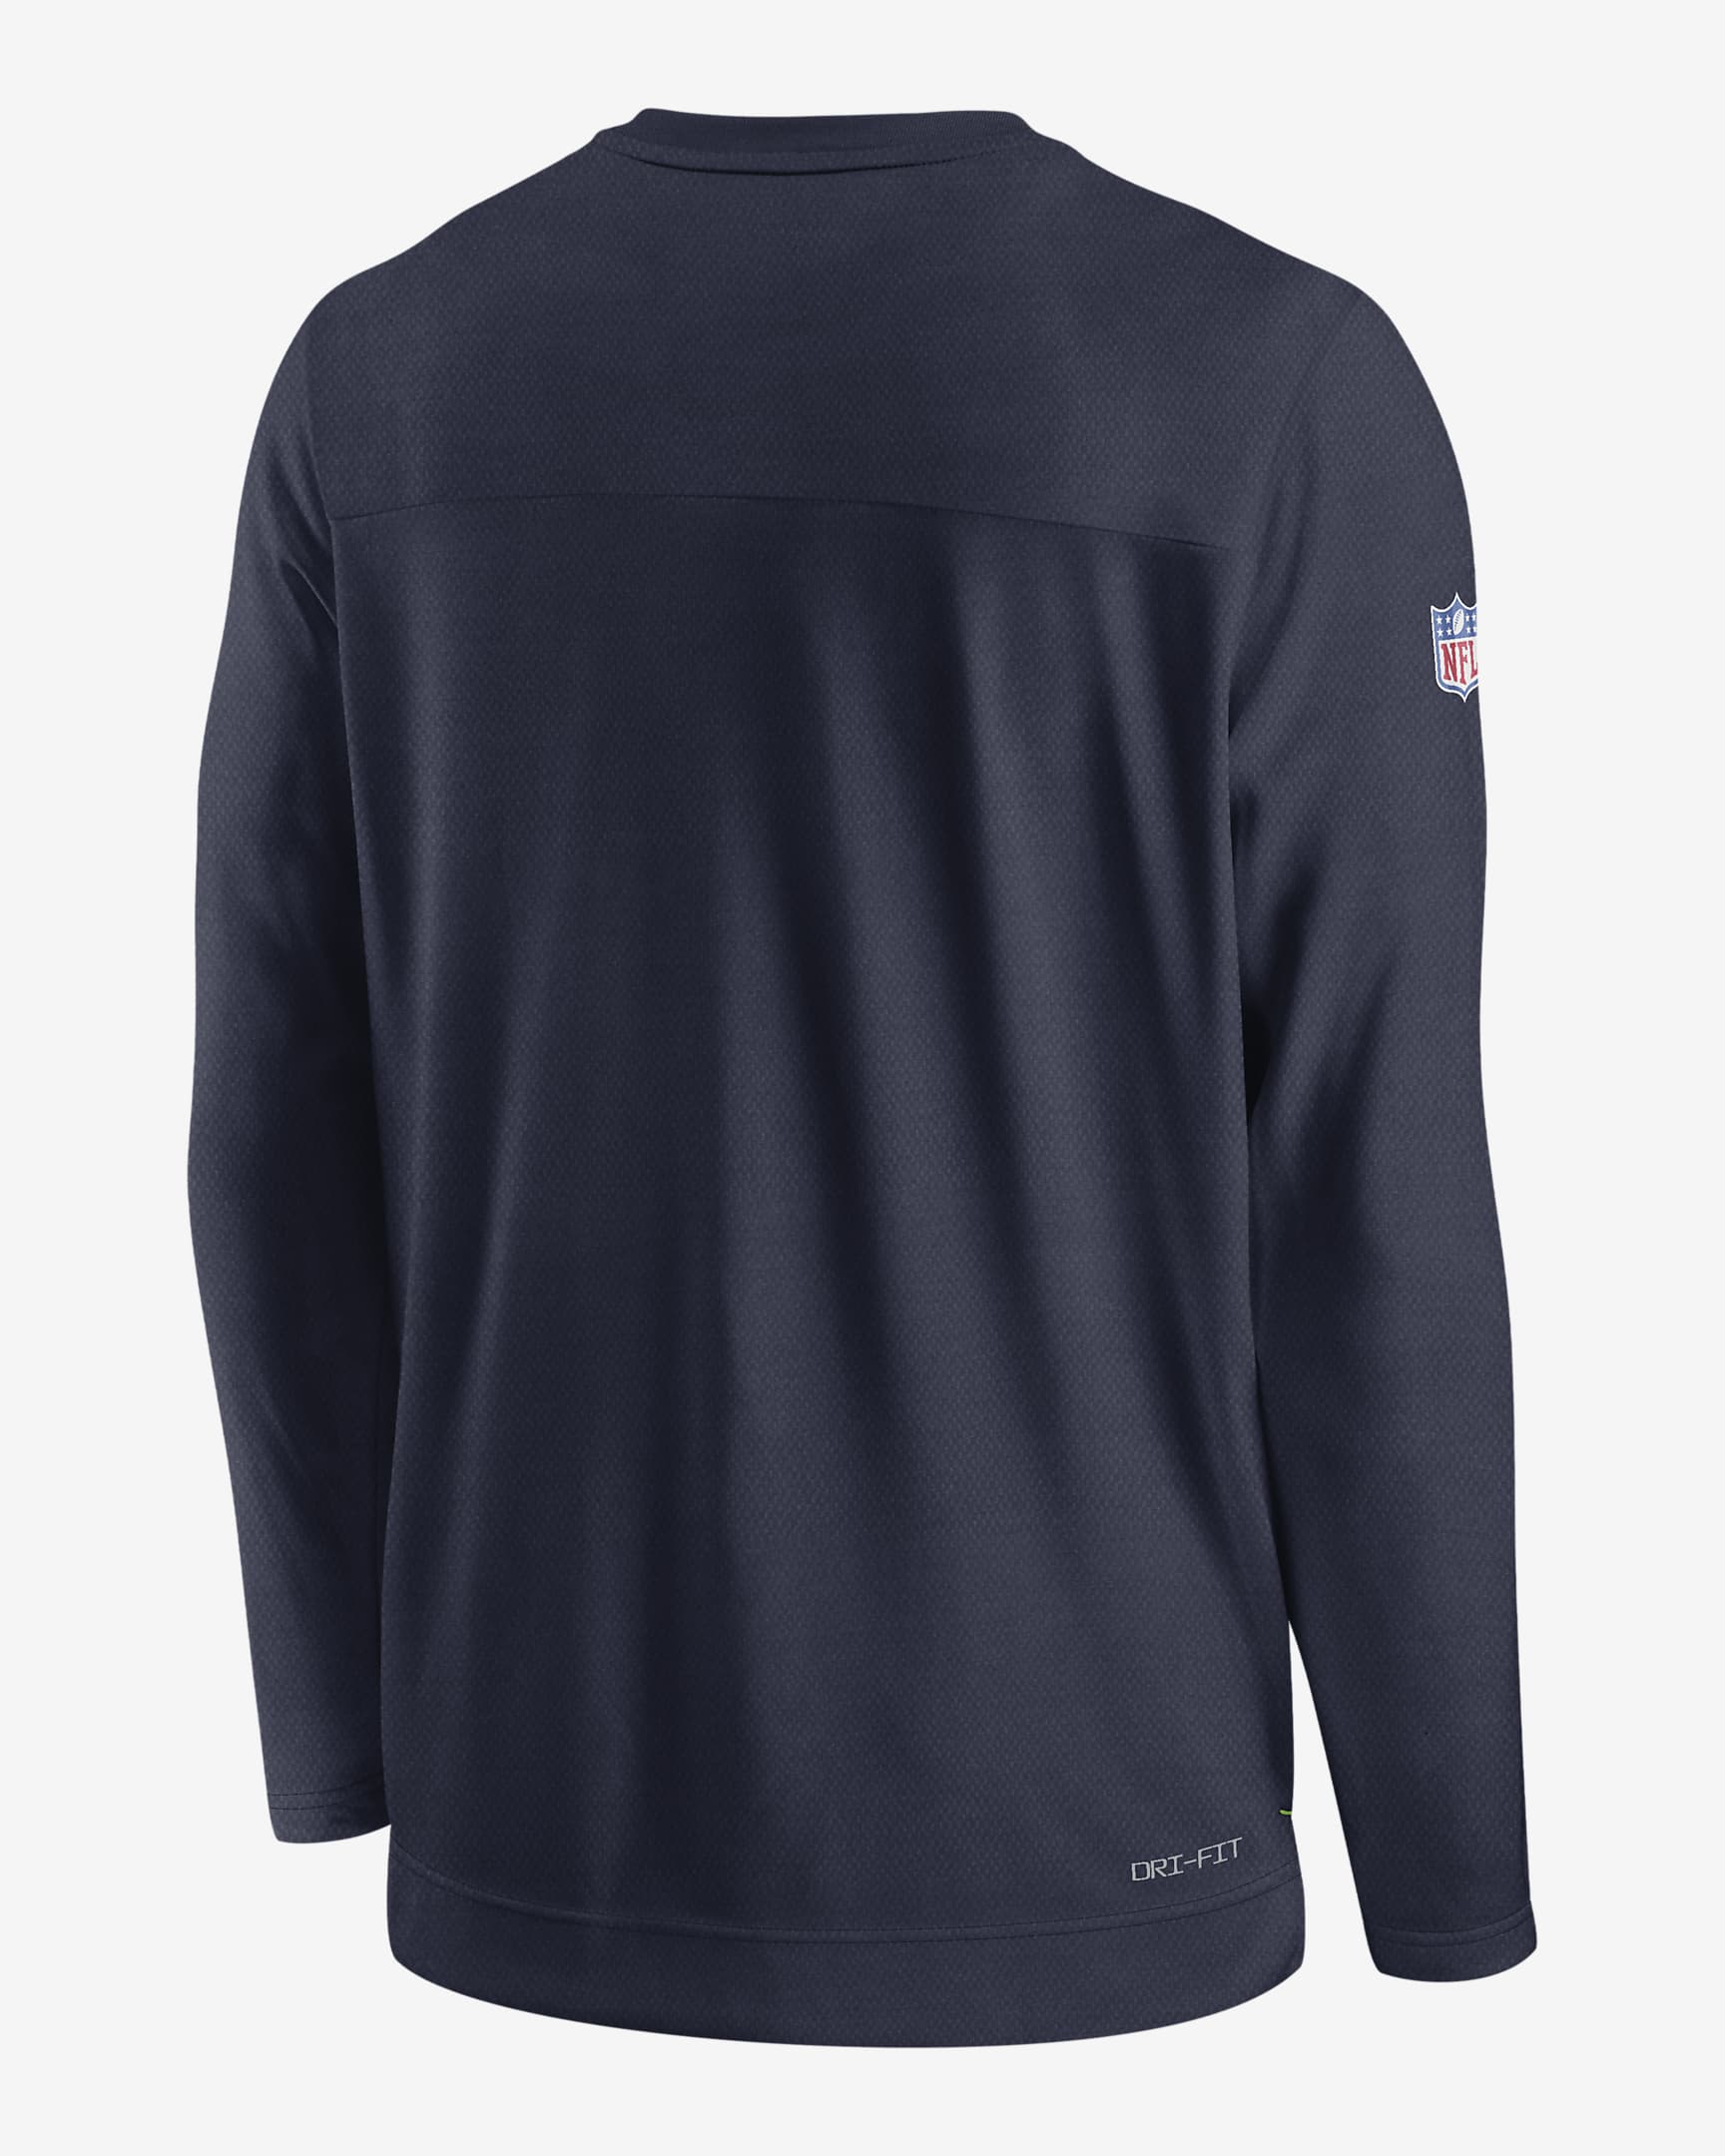 Nike Dri-FIT Lockup (NFL Seattle Seahawks) Men's Long-Sleeve Top. Nike.com